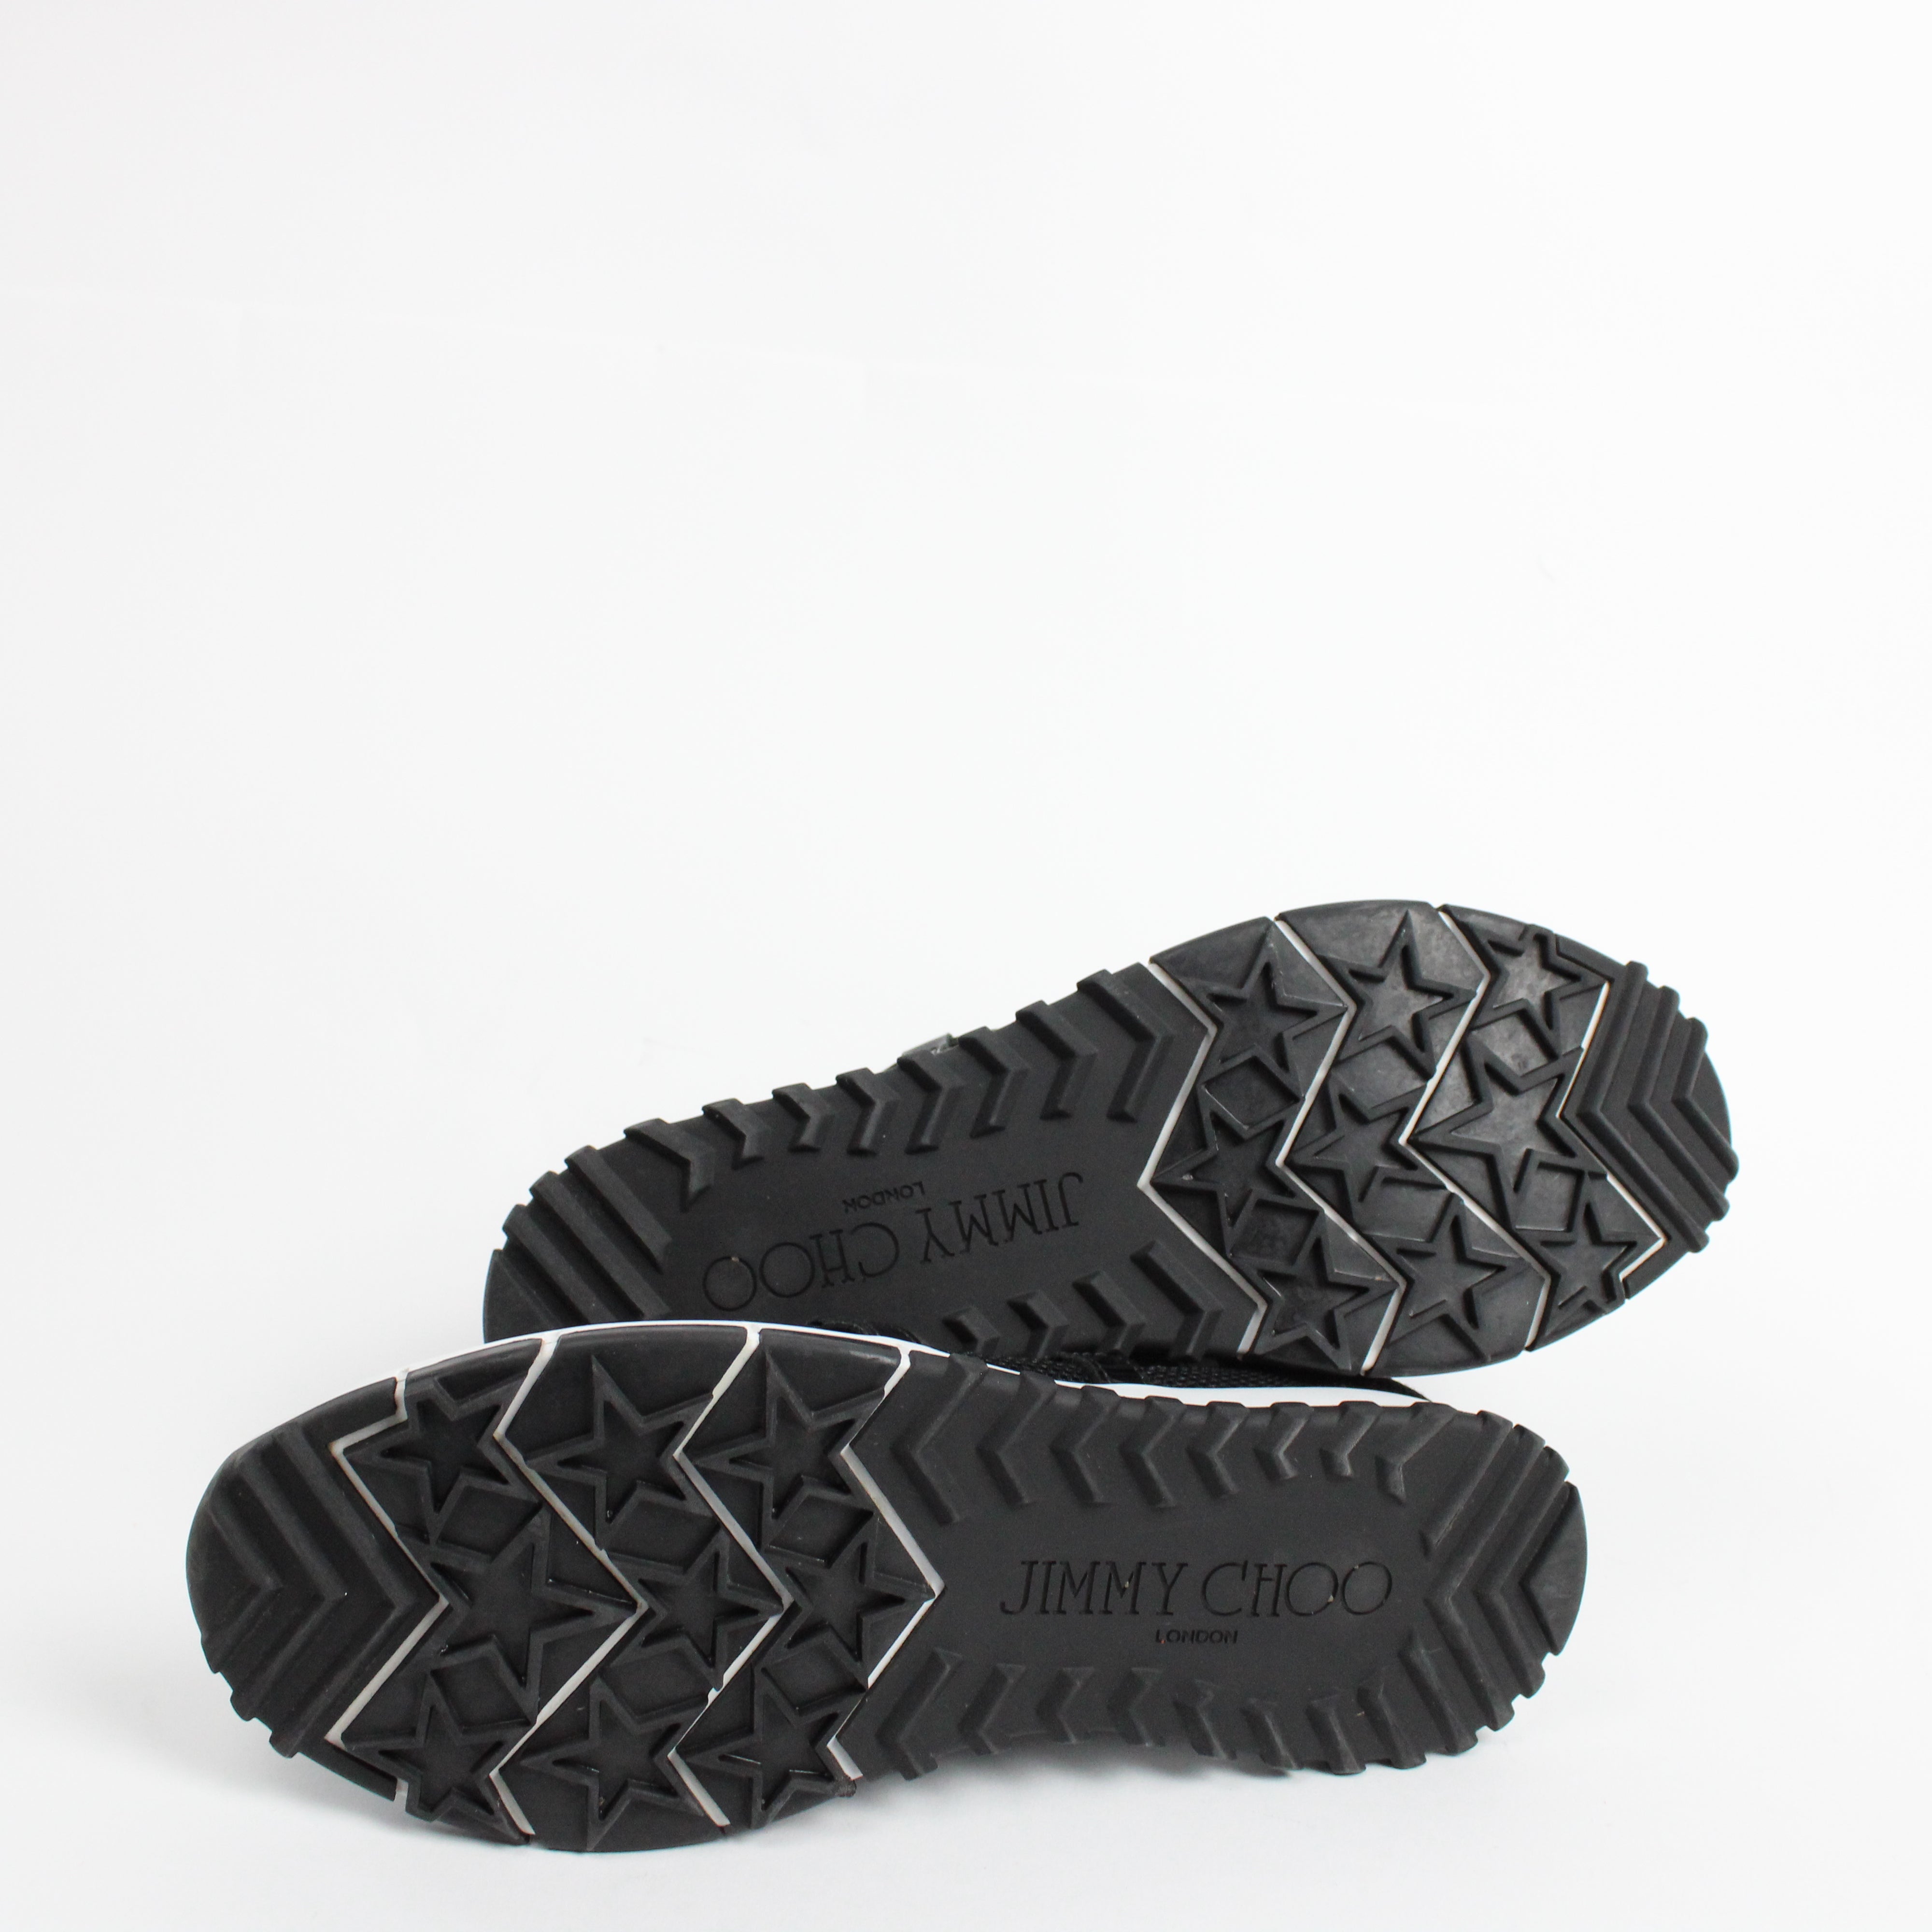 Jimmy Choo Fabric Sneakers Size 39.5